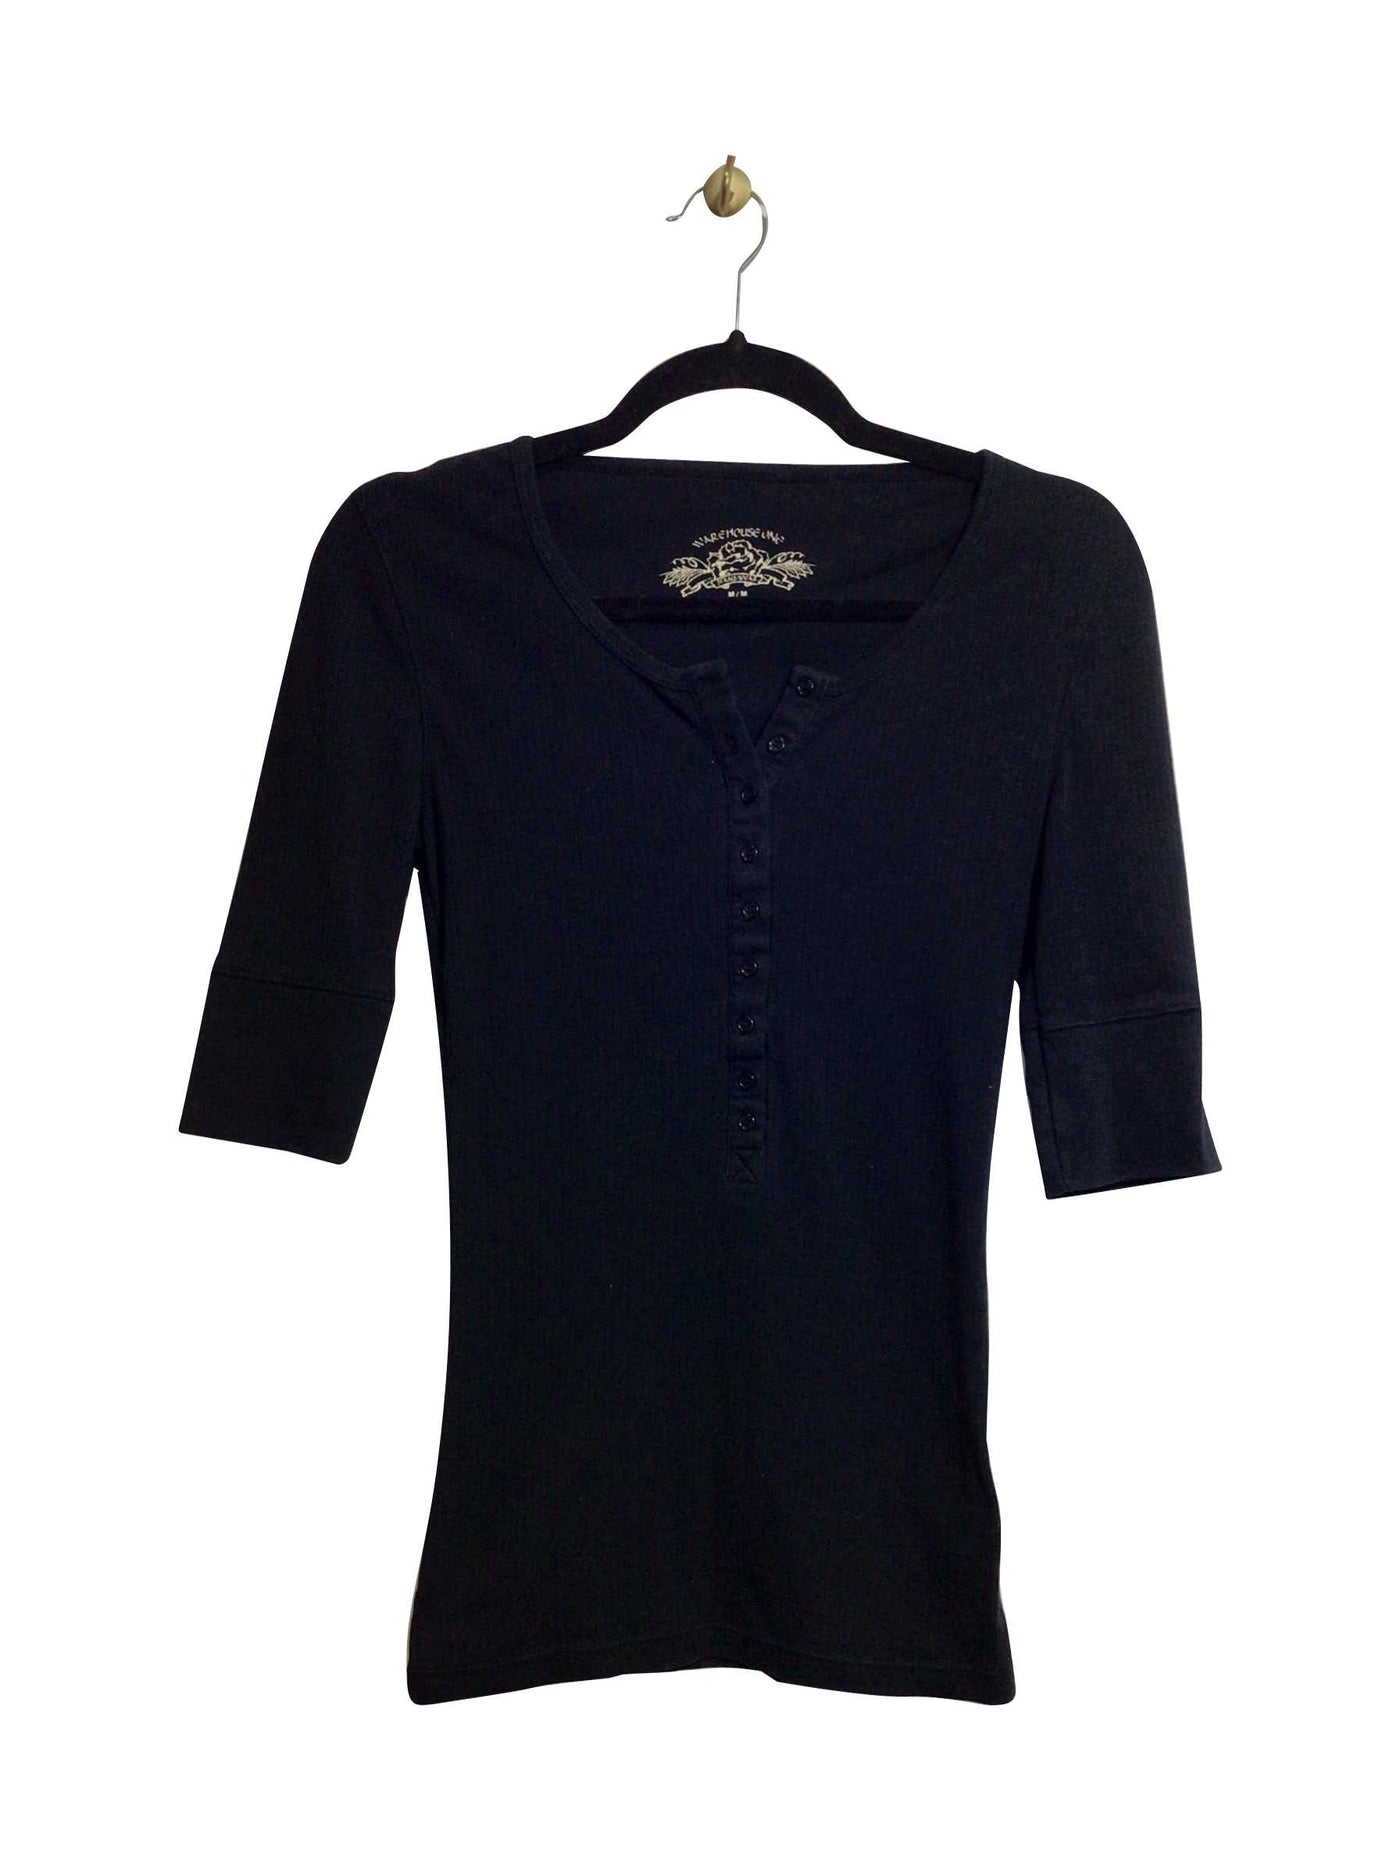 WAREHOUSE ONE Regular fit T-shirt in Black - Size M | 11.29 $ KOOP